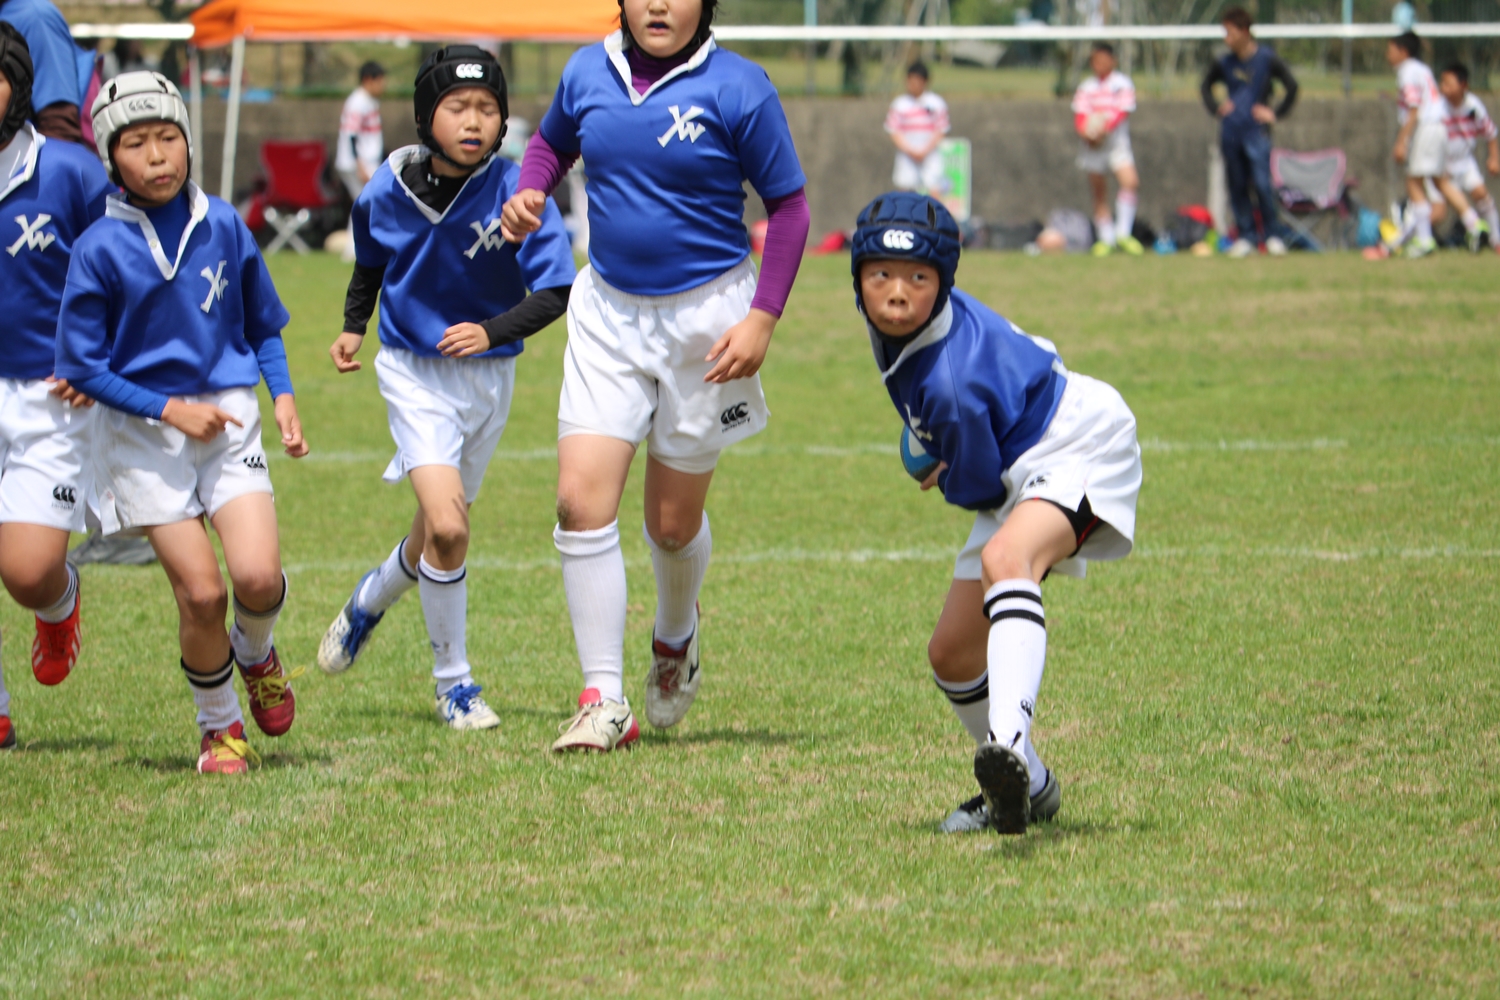 youngwave_kitakyusyu_rugby_school_kasugahai2016009.JPG